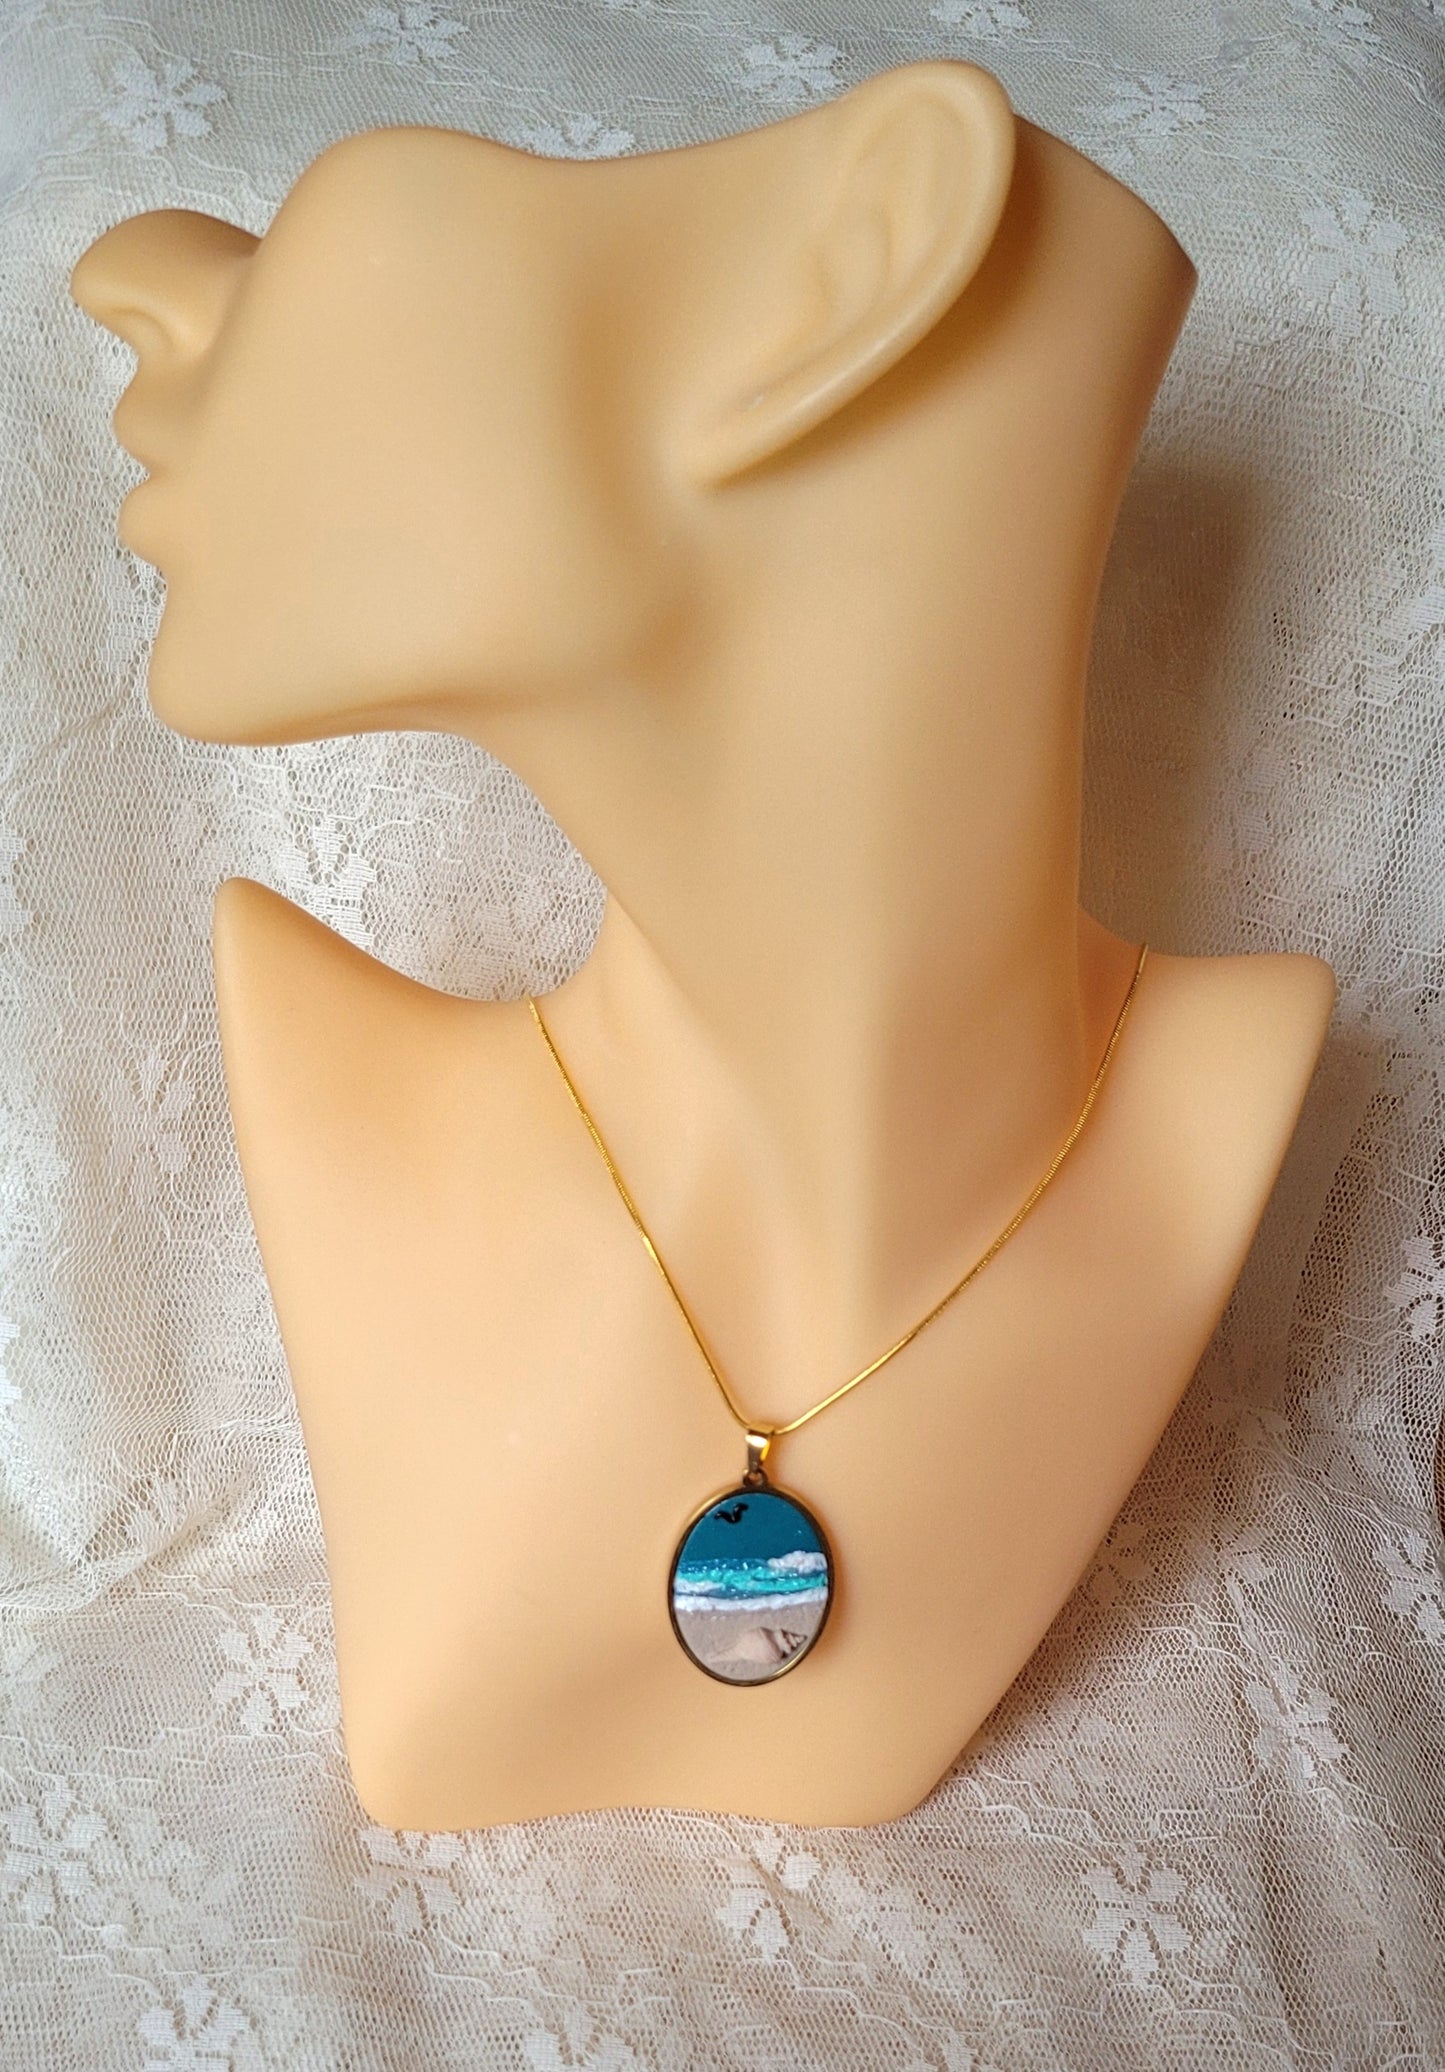 Beach pendant| Beach themed necklace| Gift for beach lover